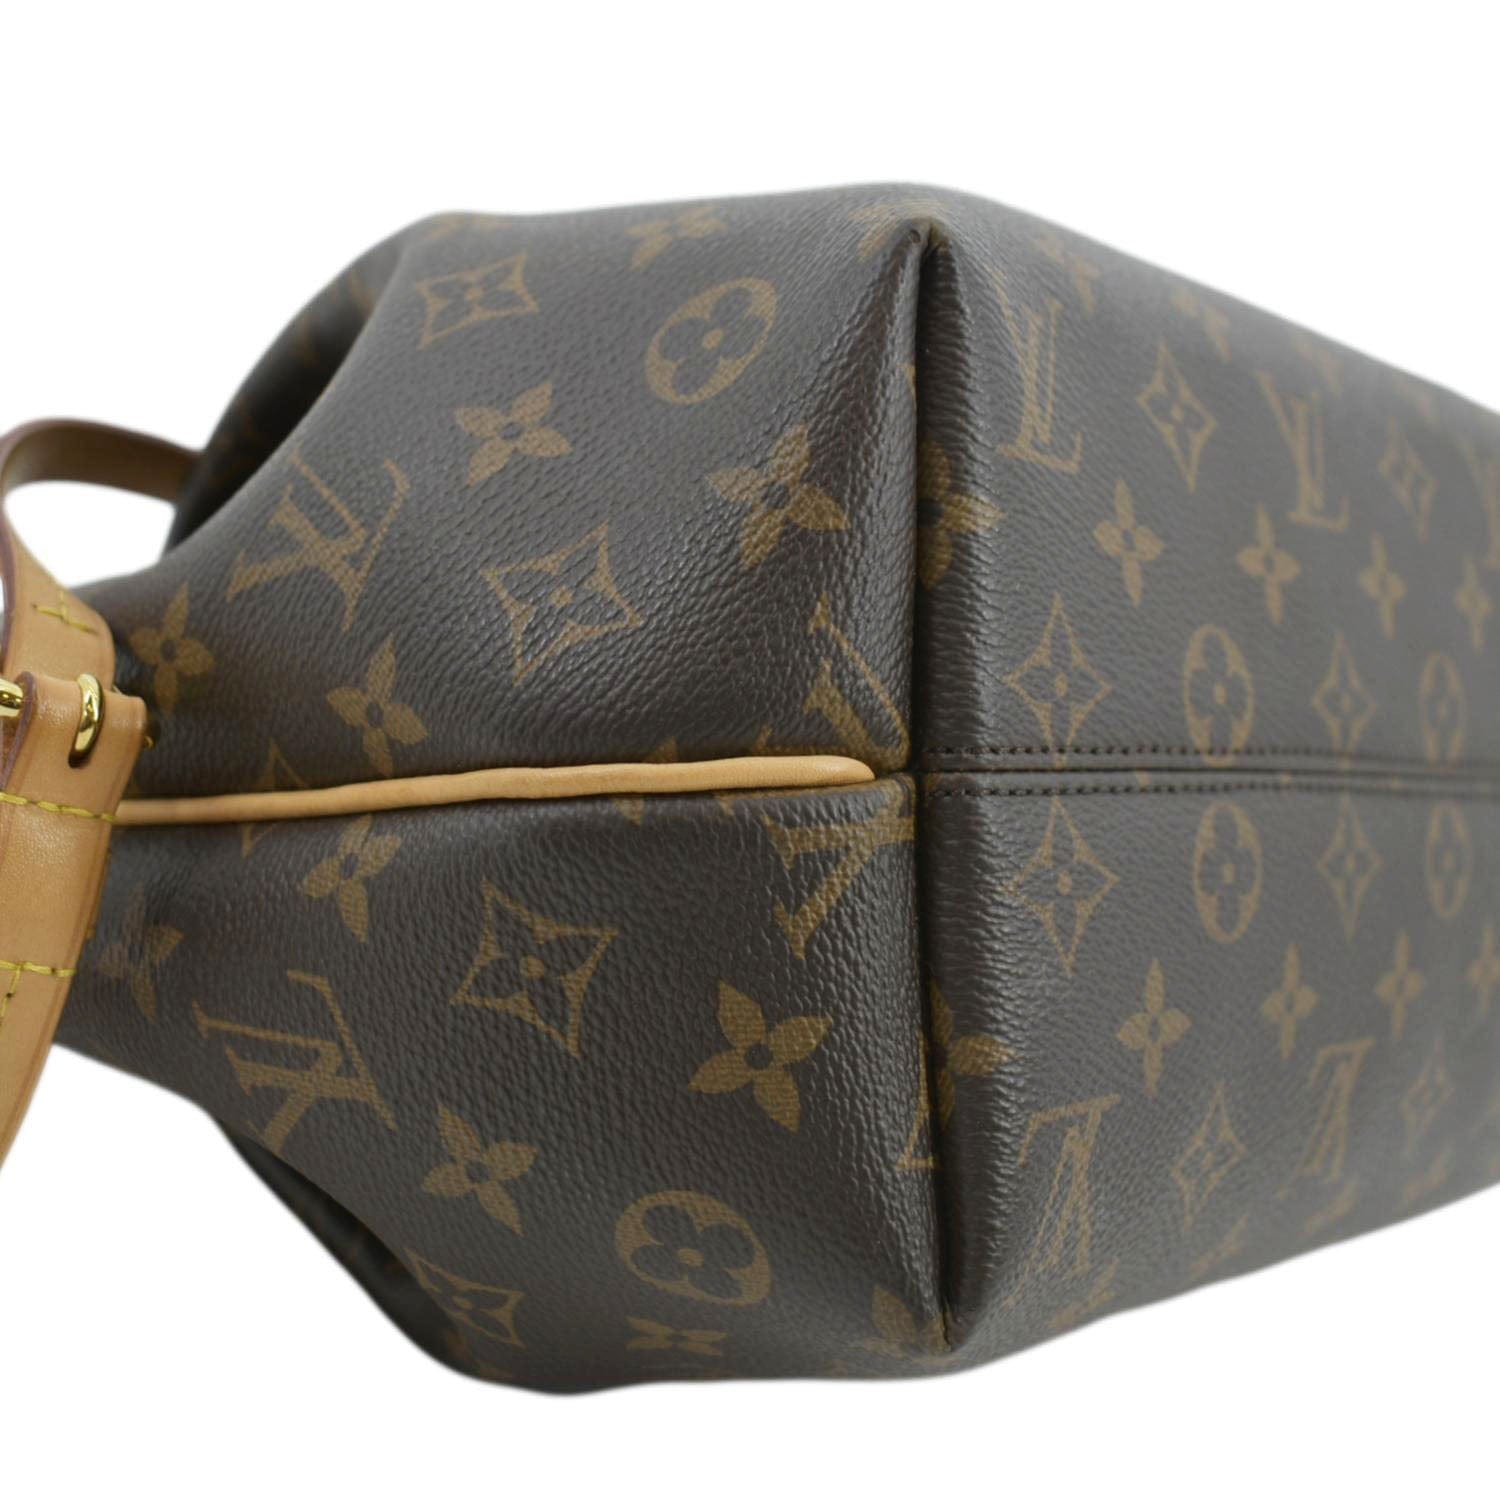 Louis Vuitton 2016 pre-owned Monogram Turenne PM handbag